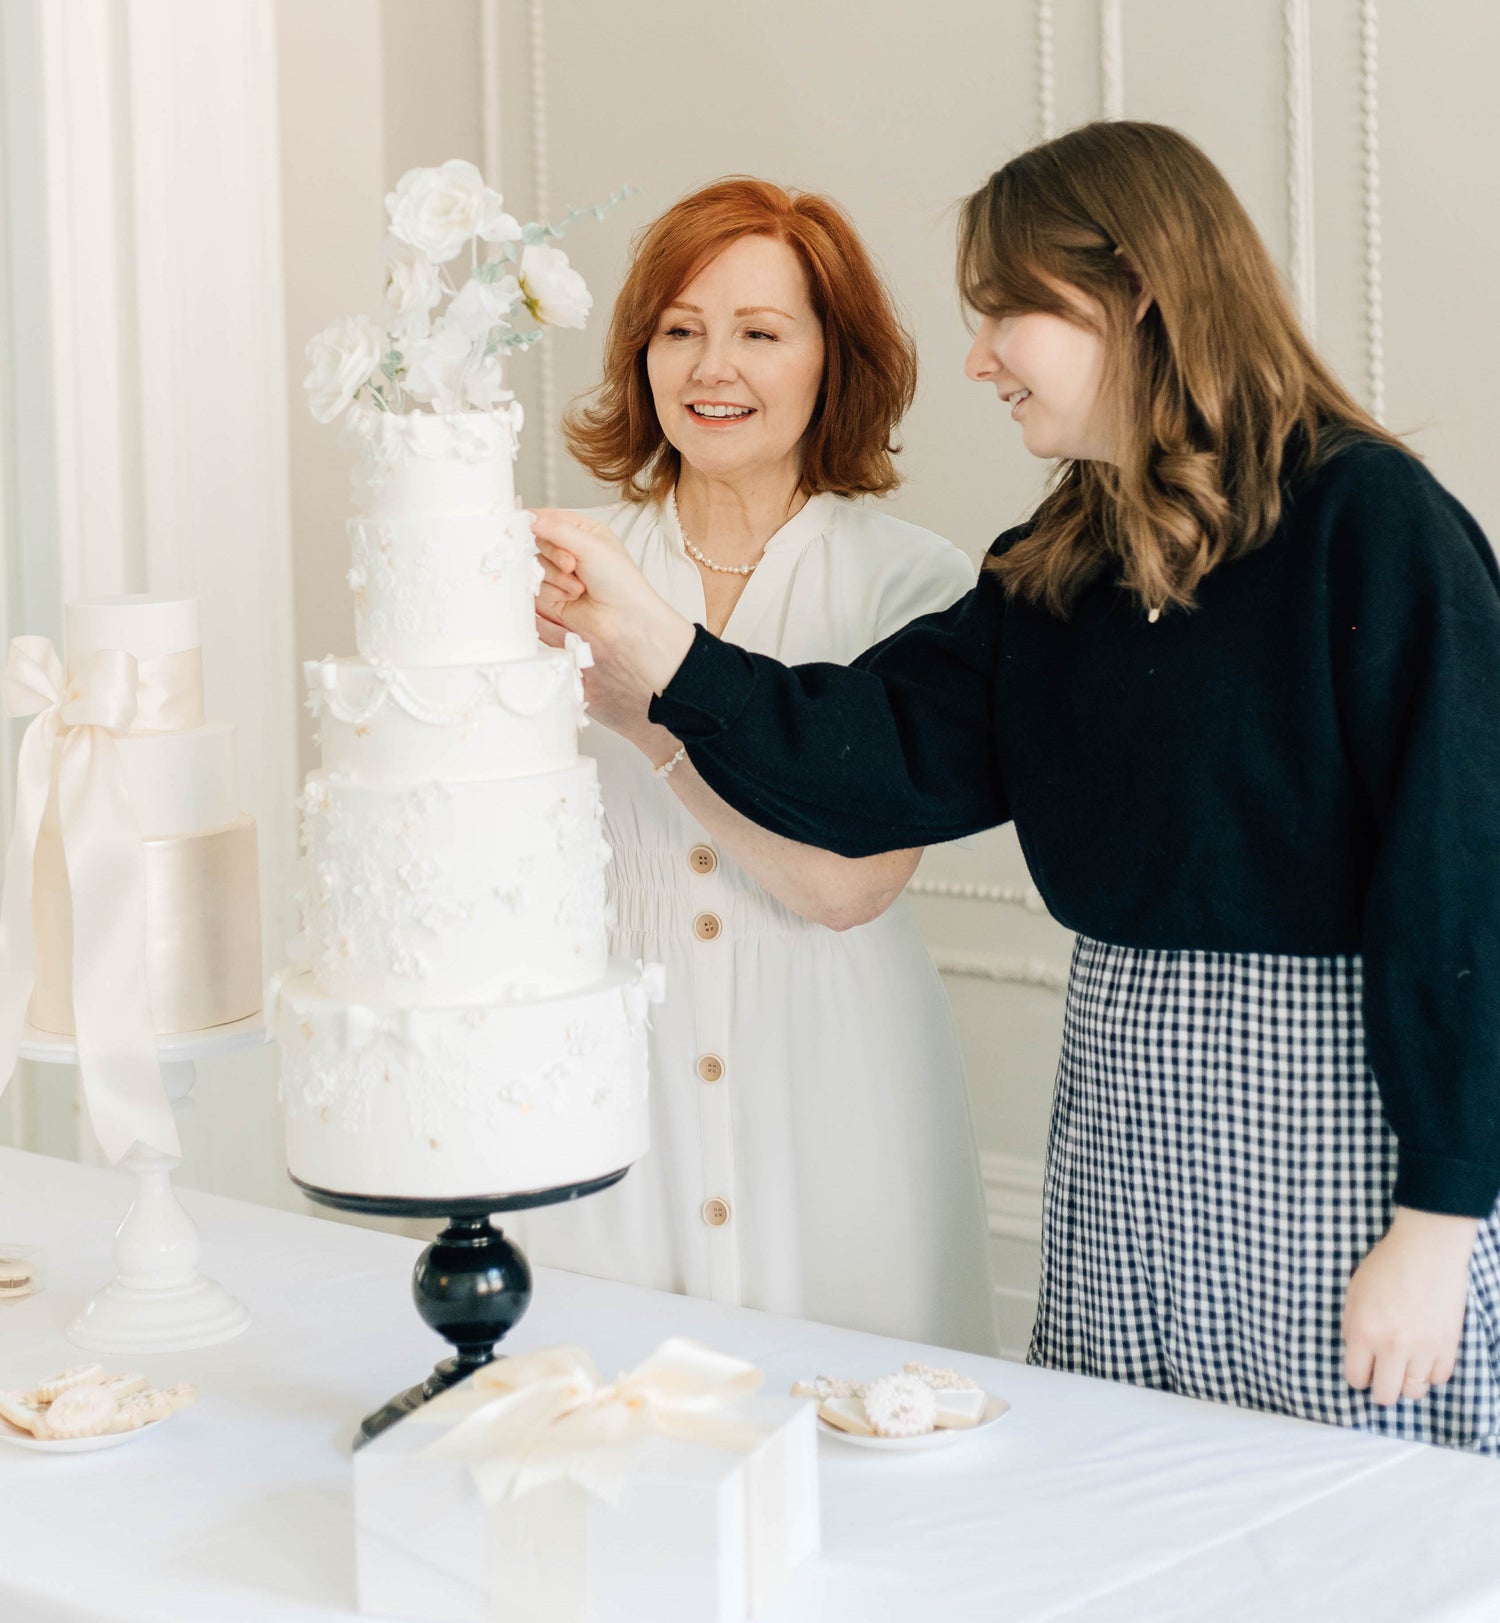 Amanda and Maddy decorating a wedding cake